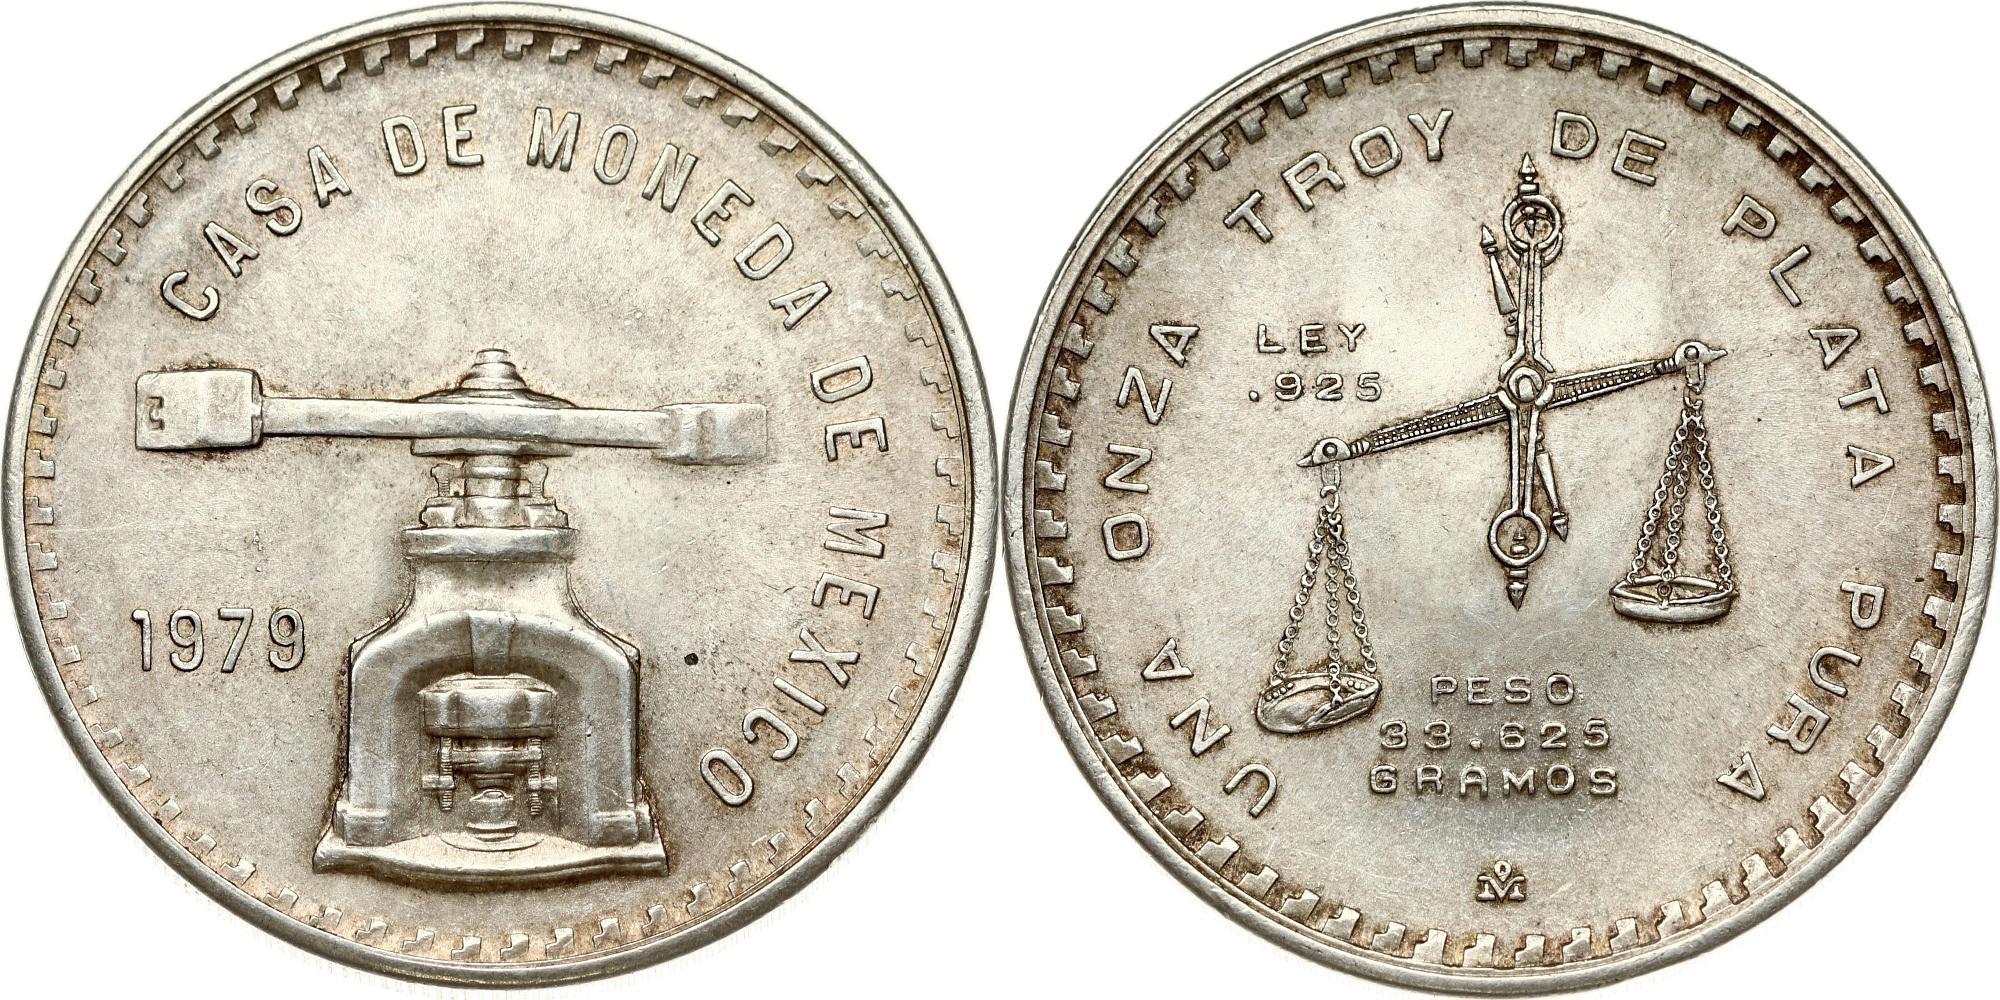 Lot: 1315 | Mexico 1 Onza 1979 Obverse: Coin mint called 'de